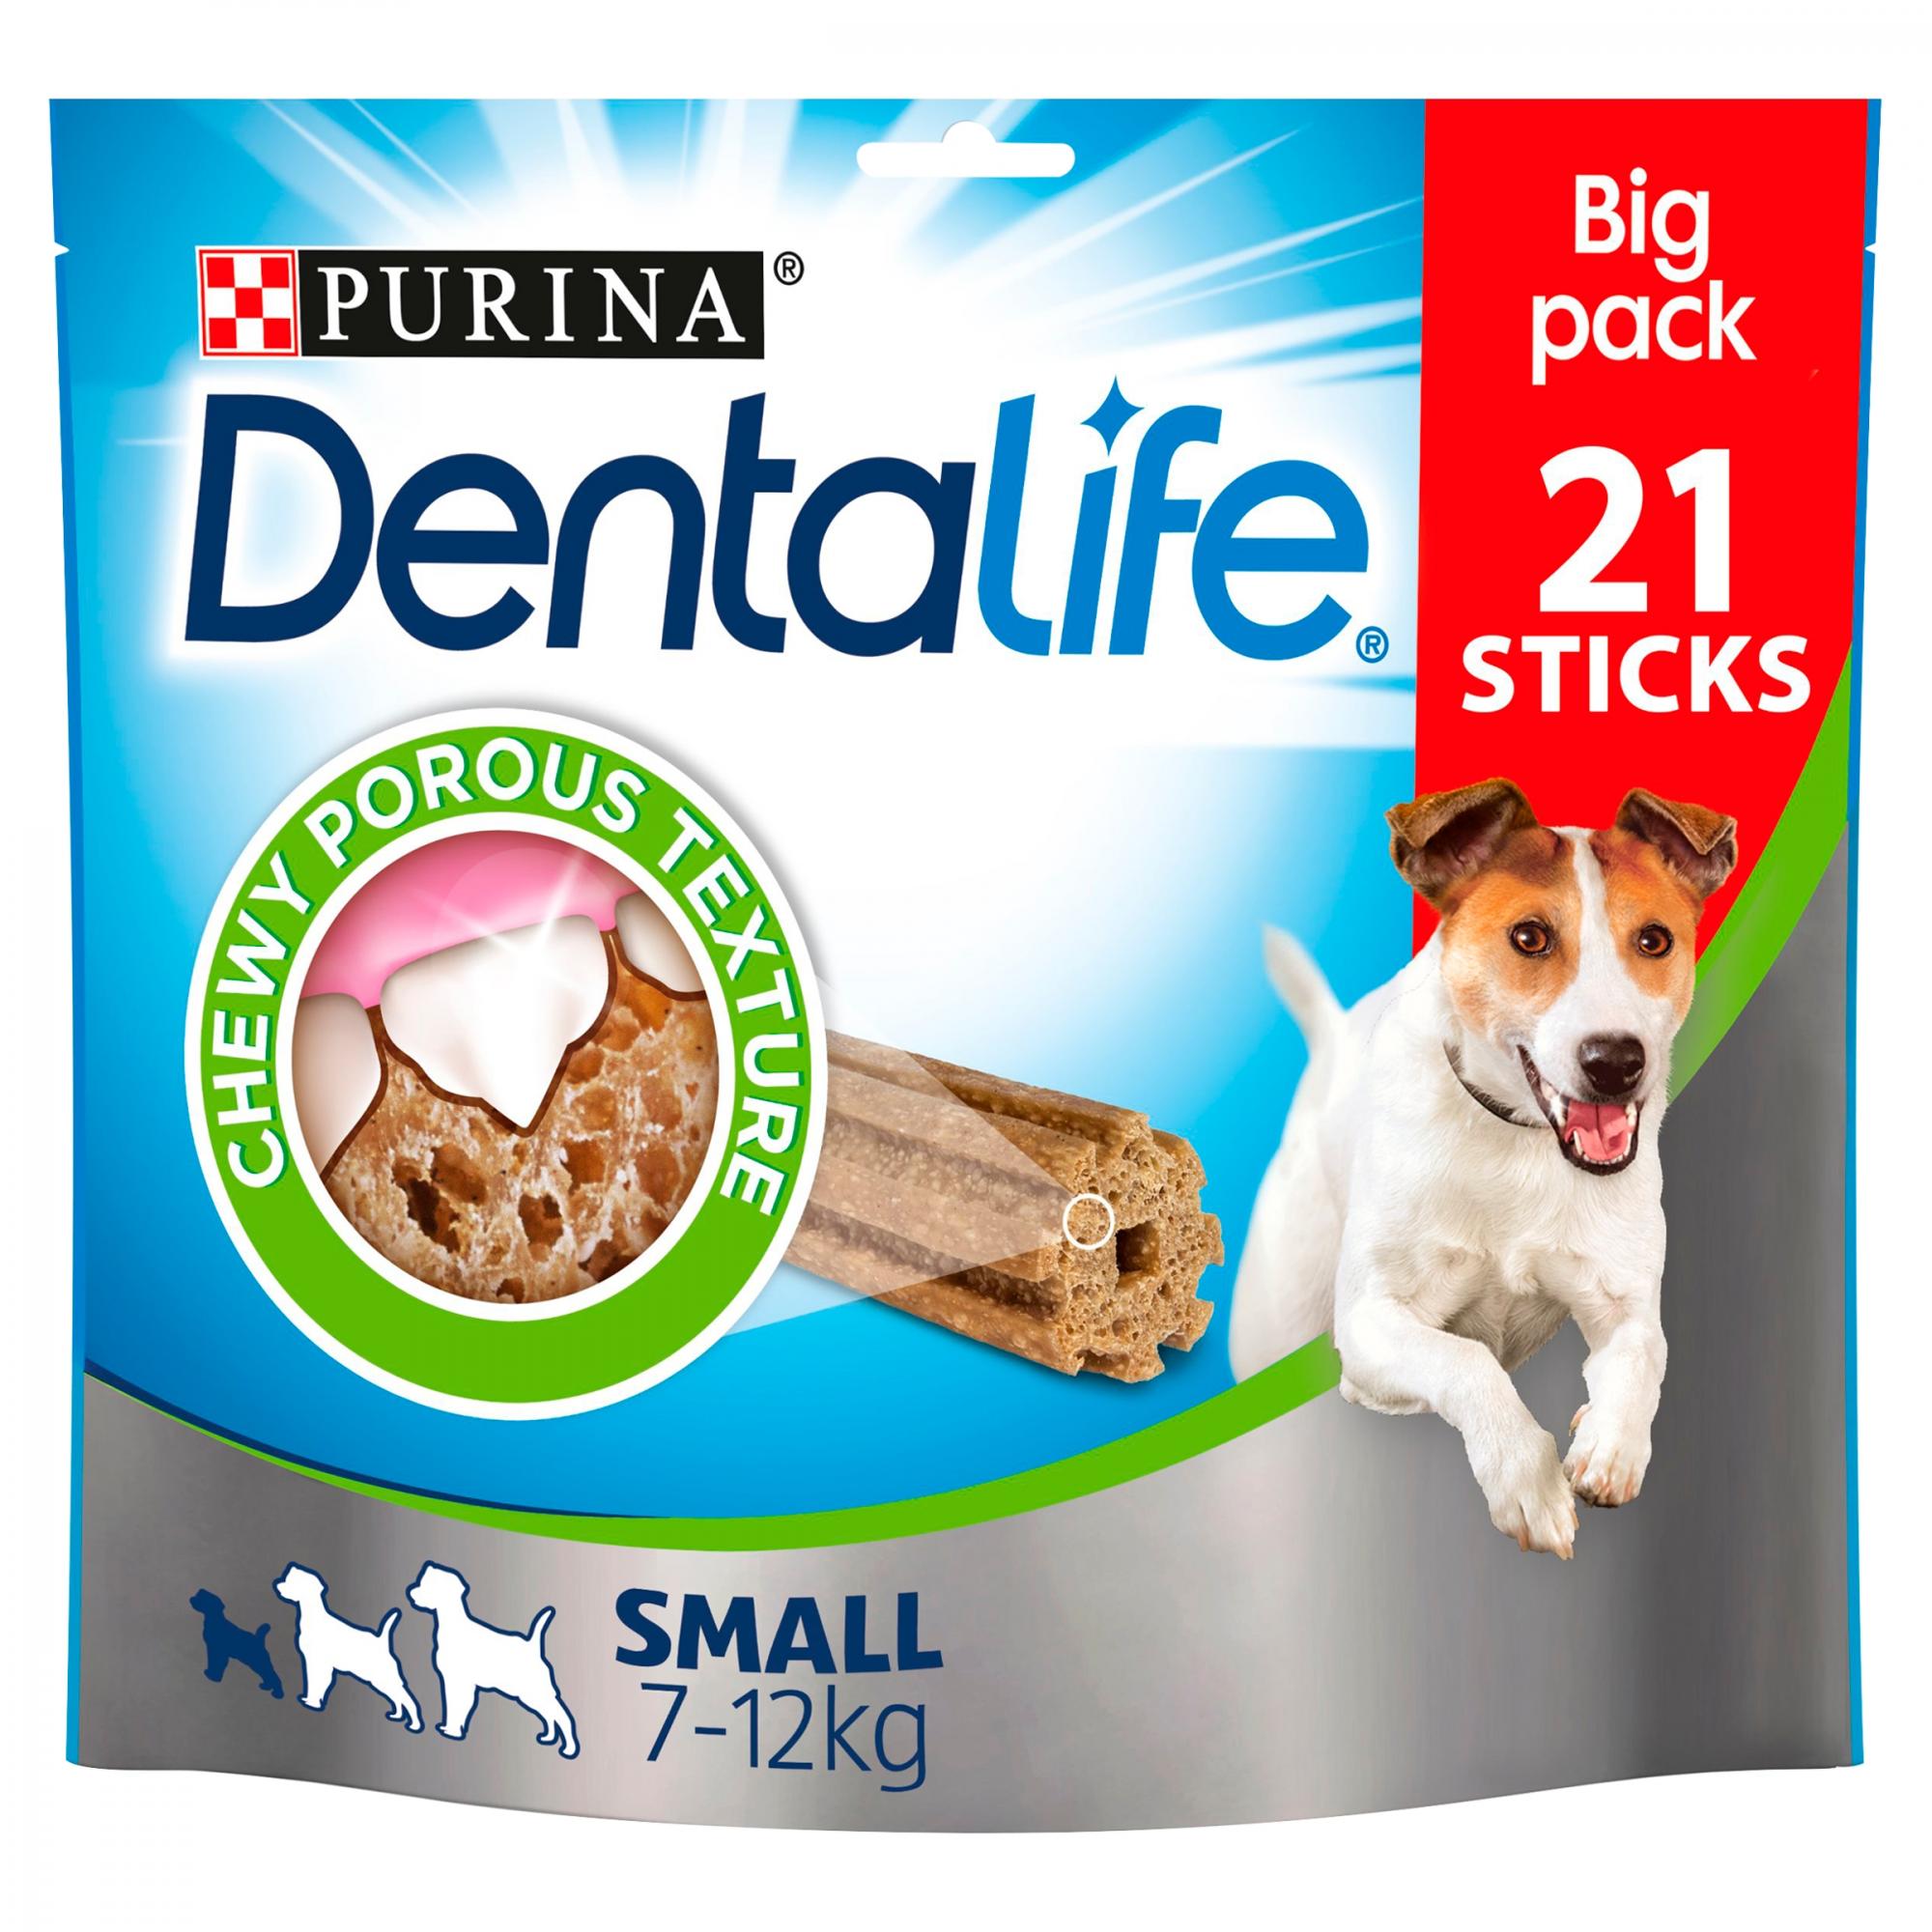 Dentalife Treats Dental Sticks for Dogs VioVet.co.uk